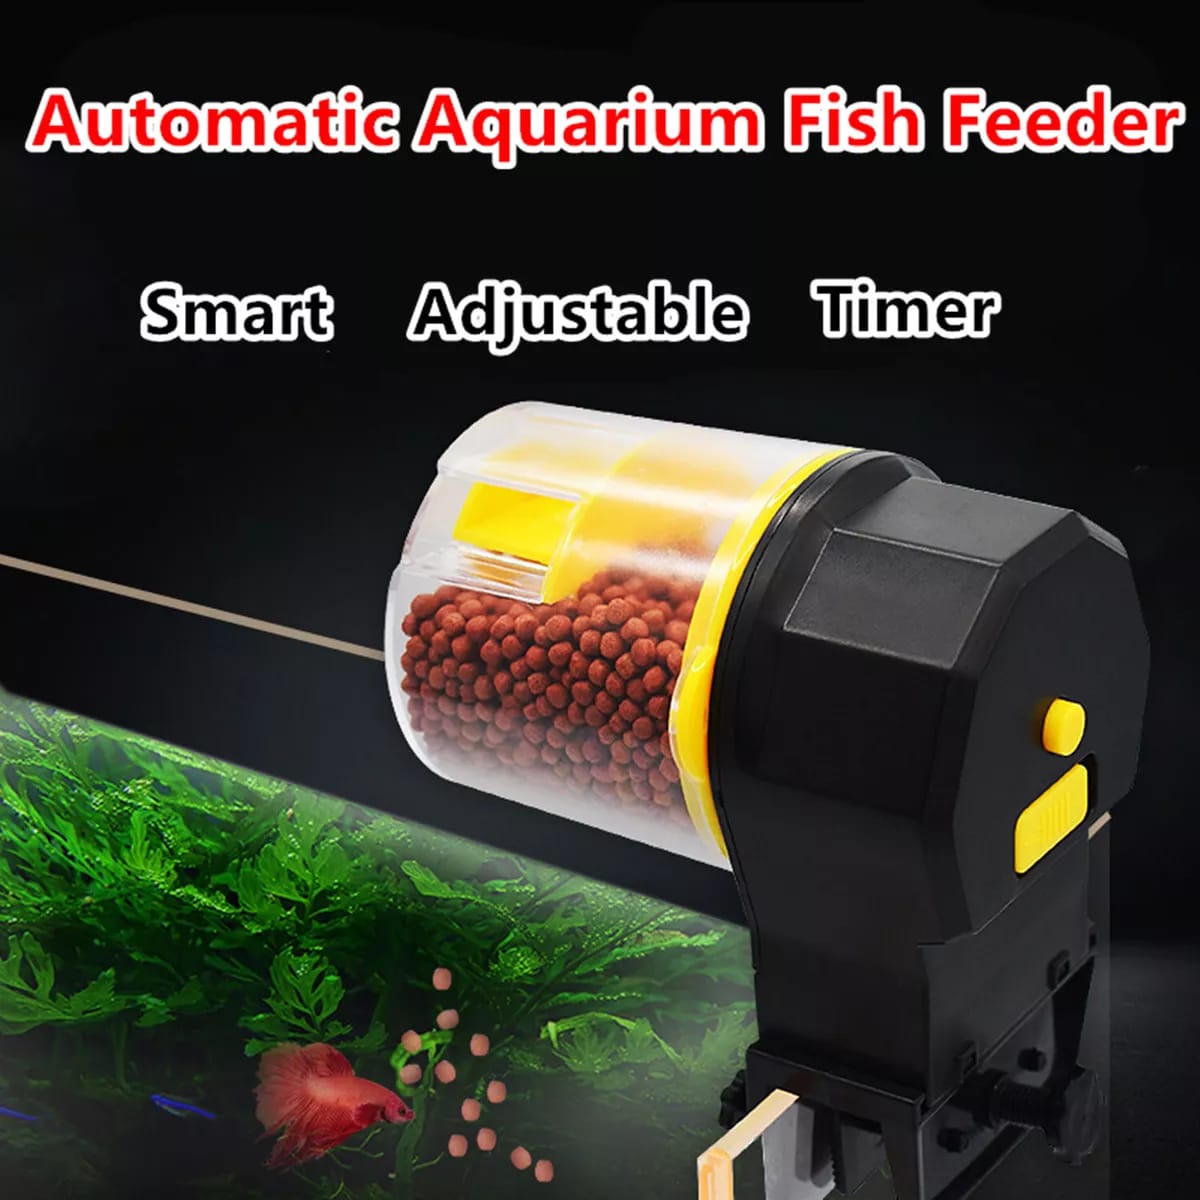 Automatic Fish Feeder Fixed in an Aquarium.